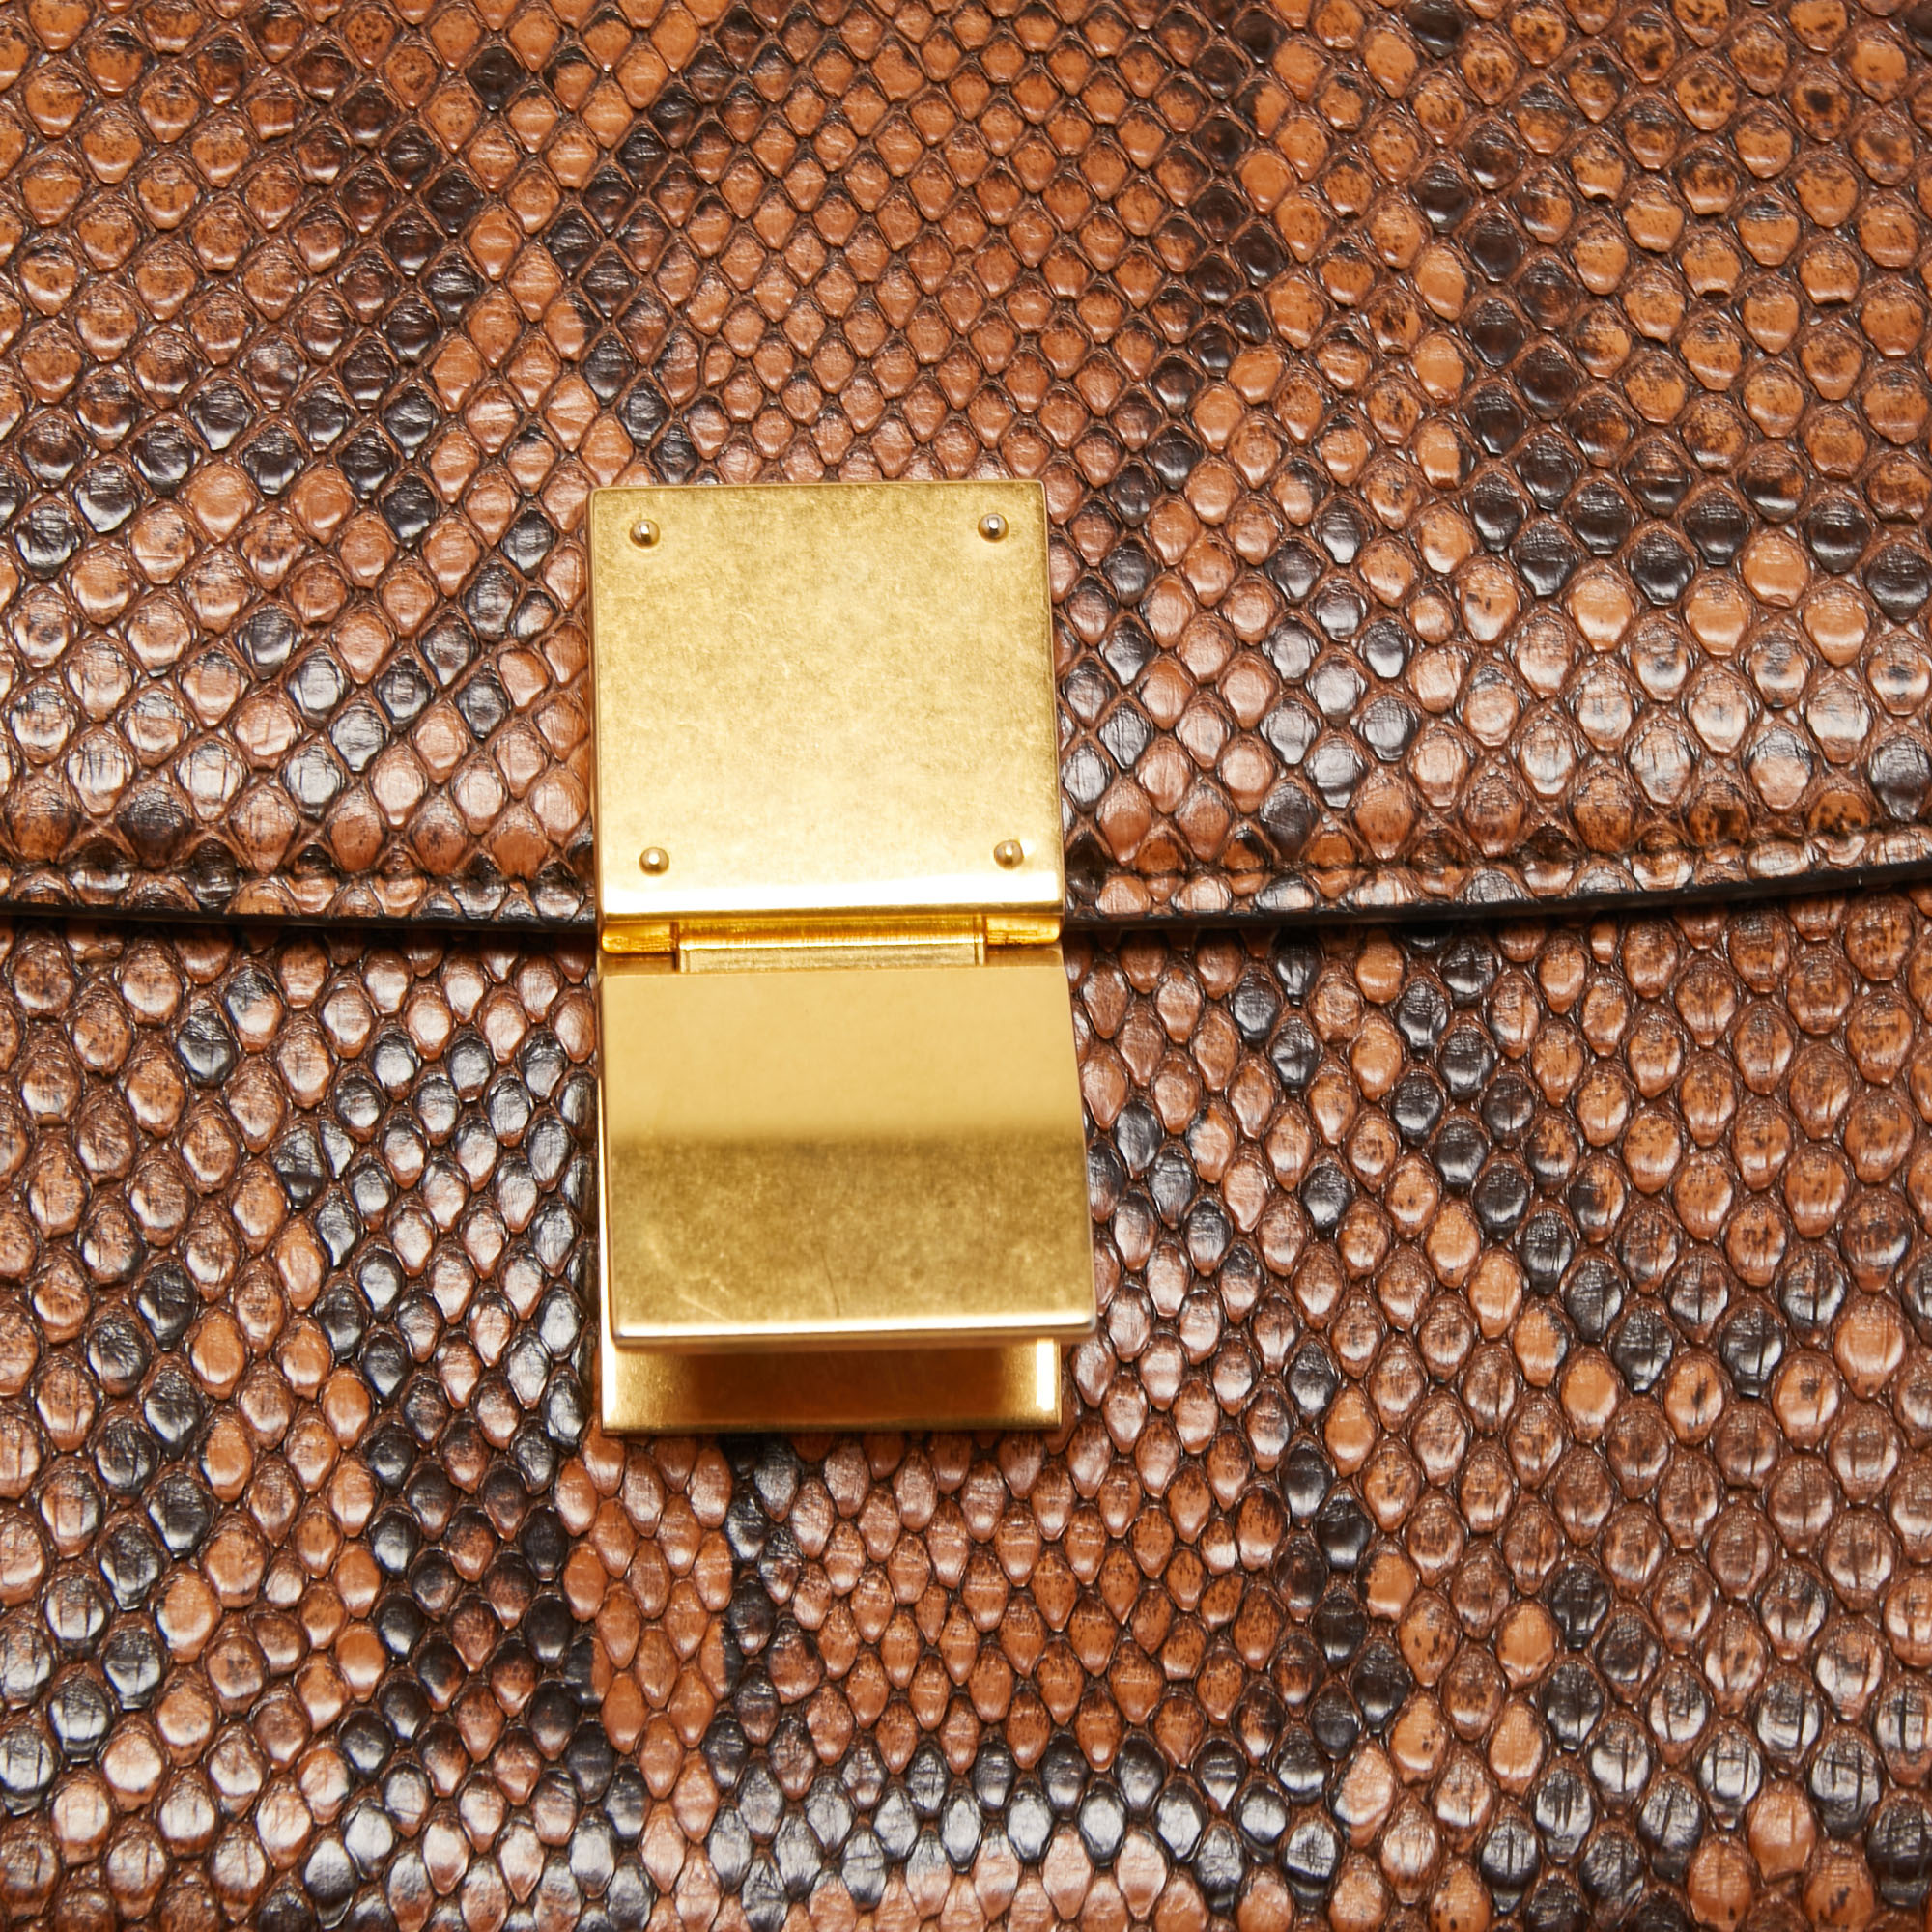 Celine Brown Python Medium Classic Box Shoulder Bag